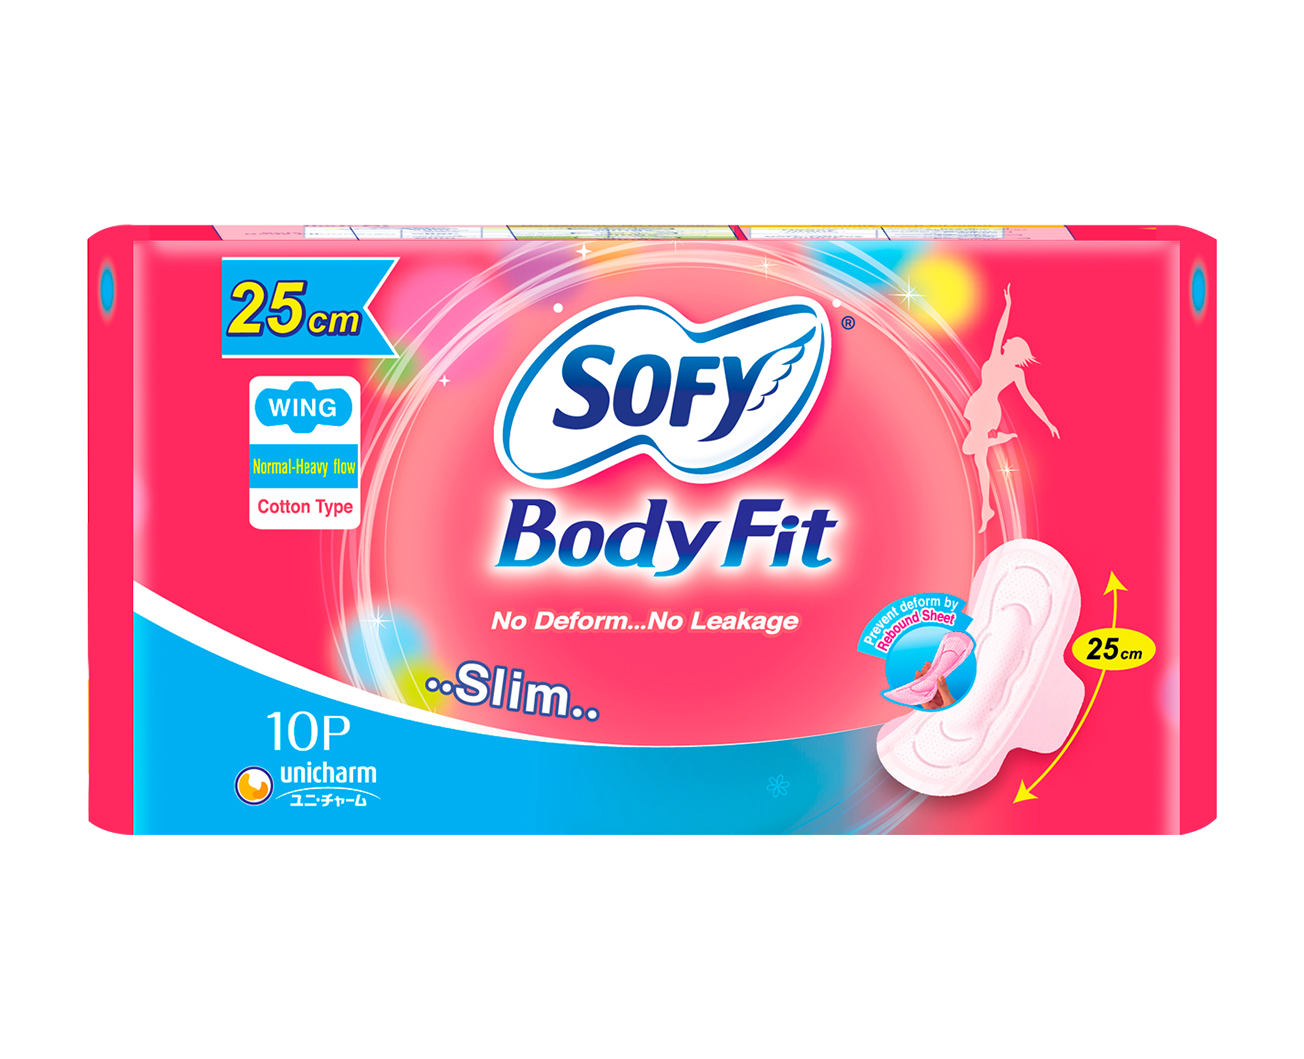 SOFY® Body Fit Day Slim Wing 25cm